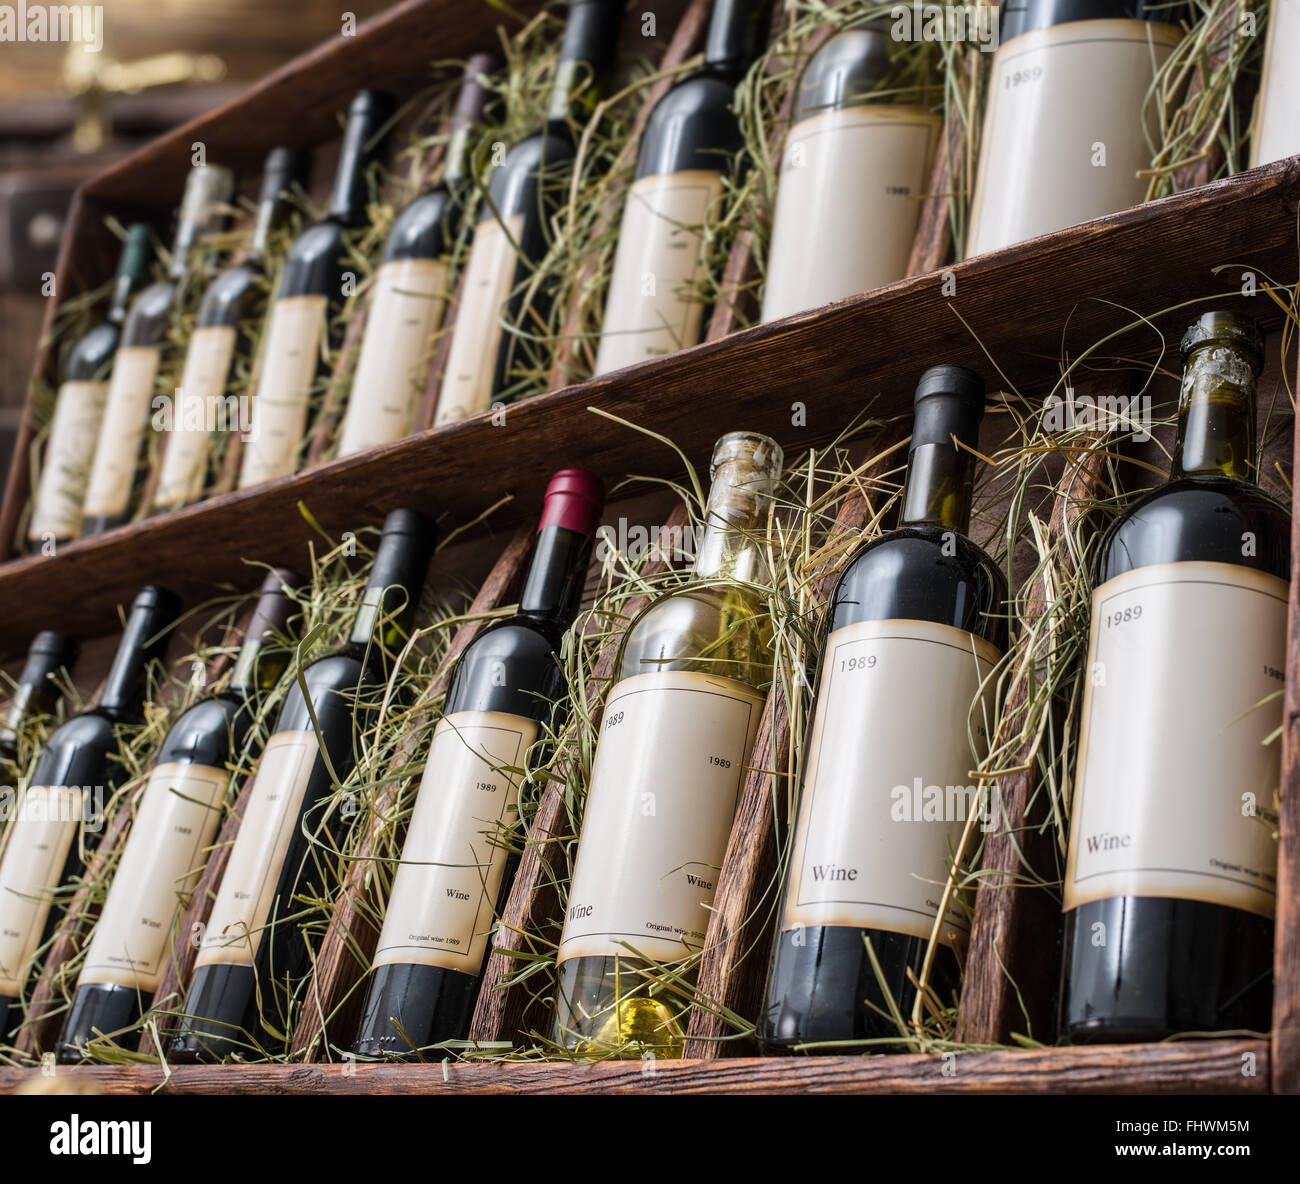 Wine bottles on the wooden shelf. Stock Photo